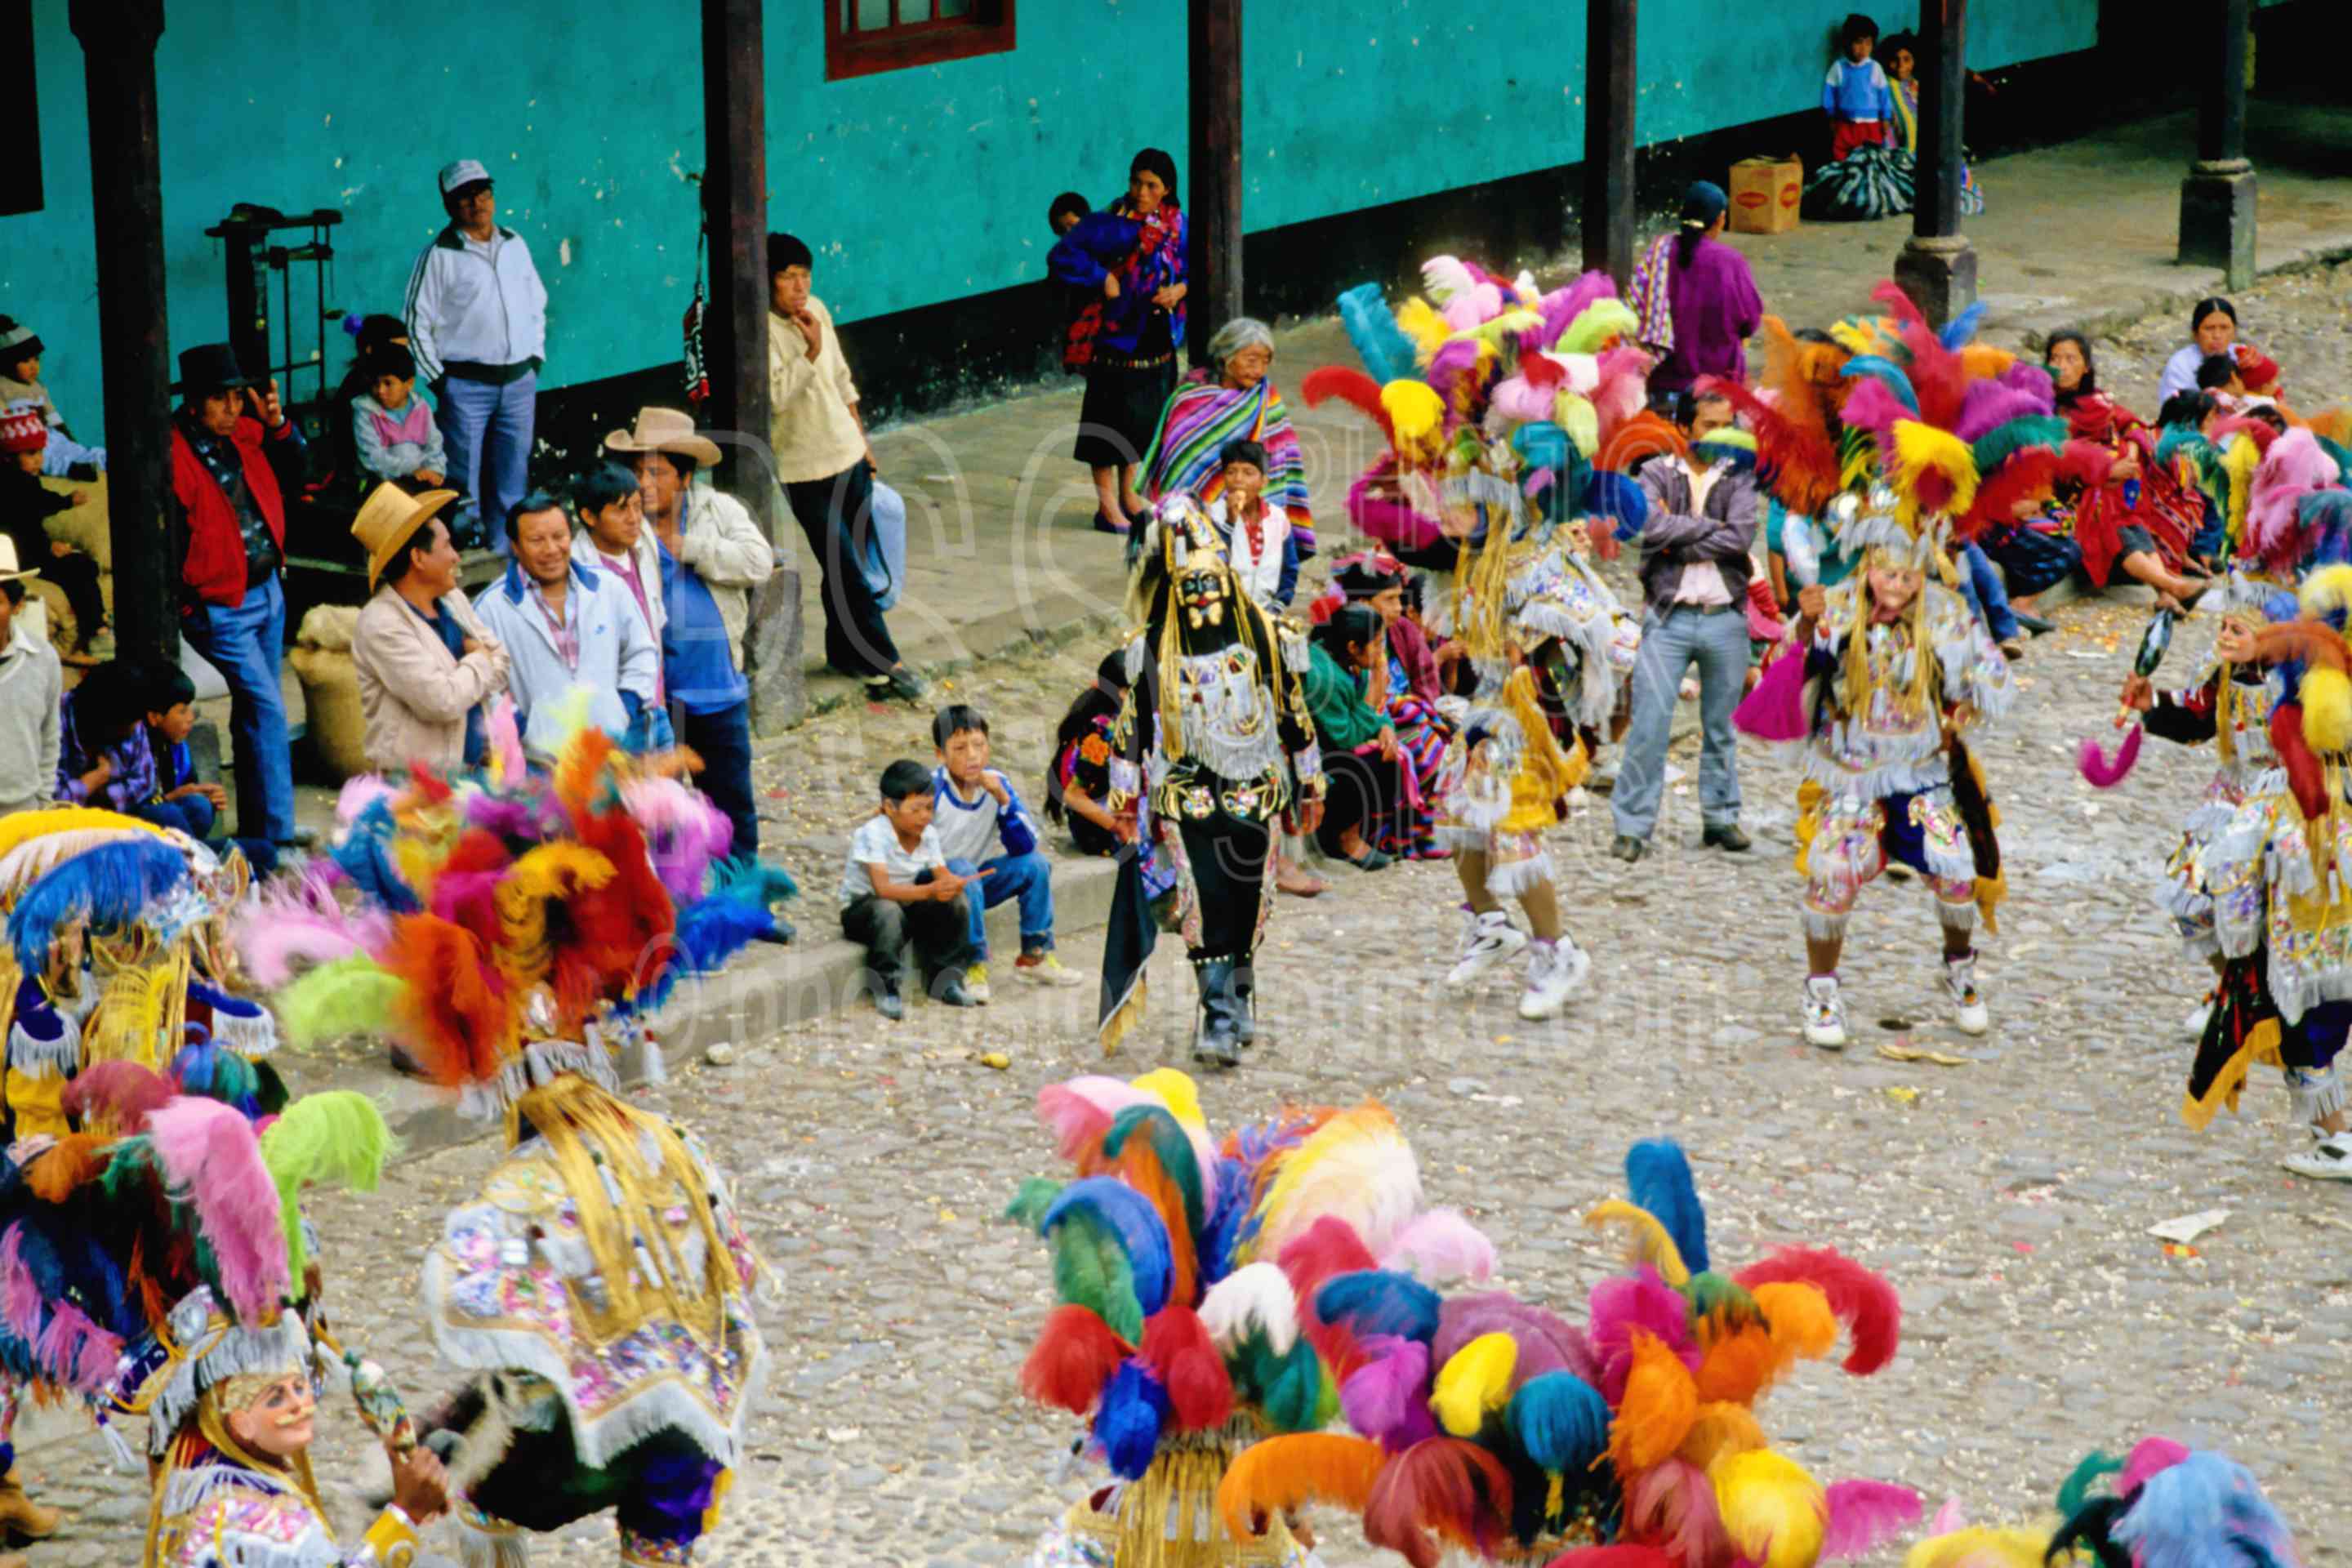 Dancing in the Square,costume,dancer,plaza,square,guatemala ceremonies